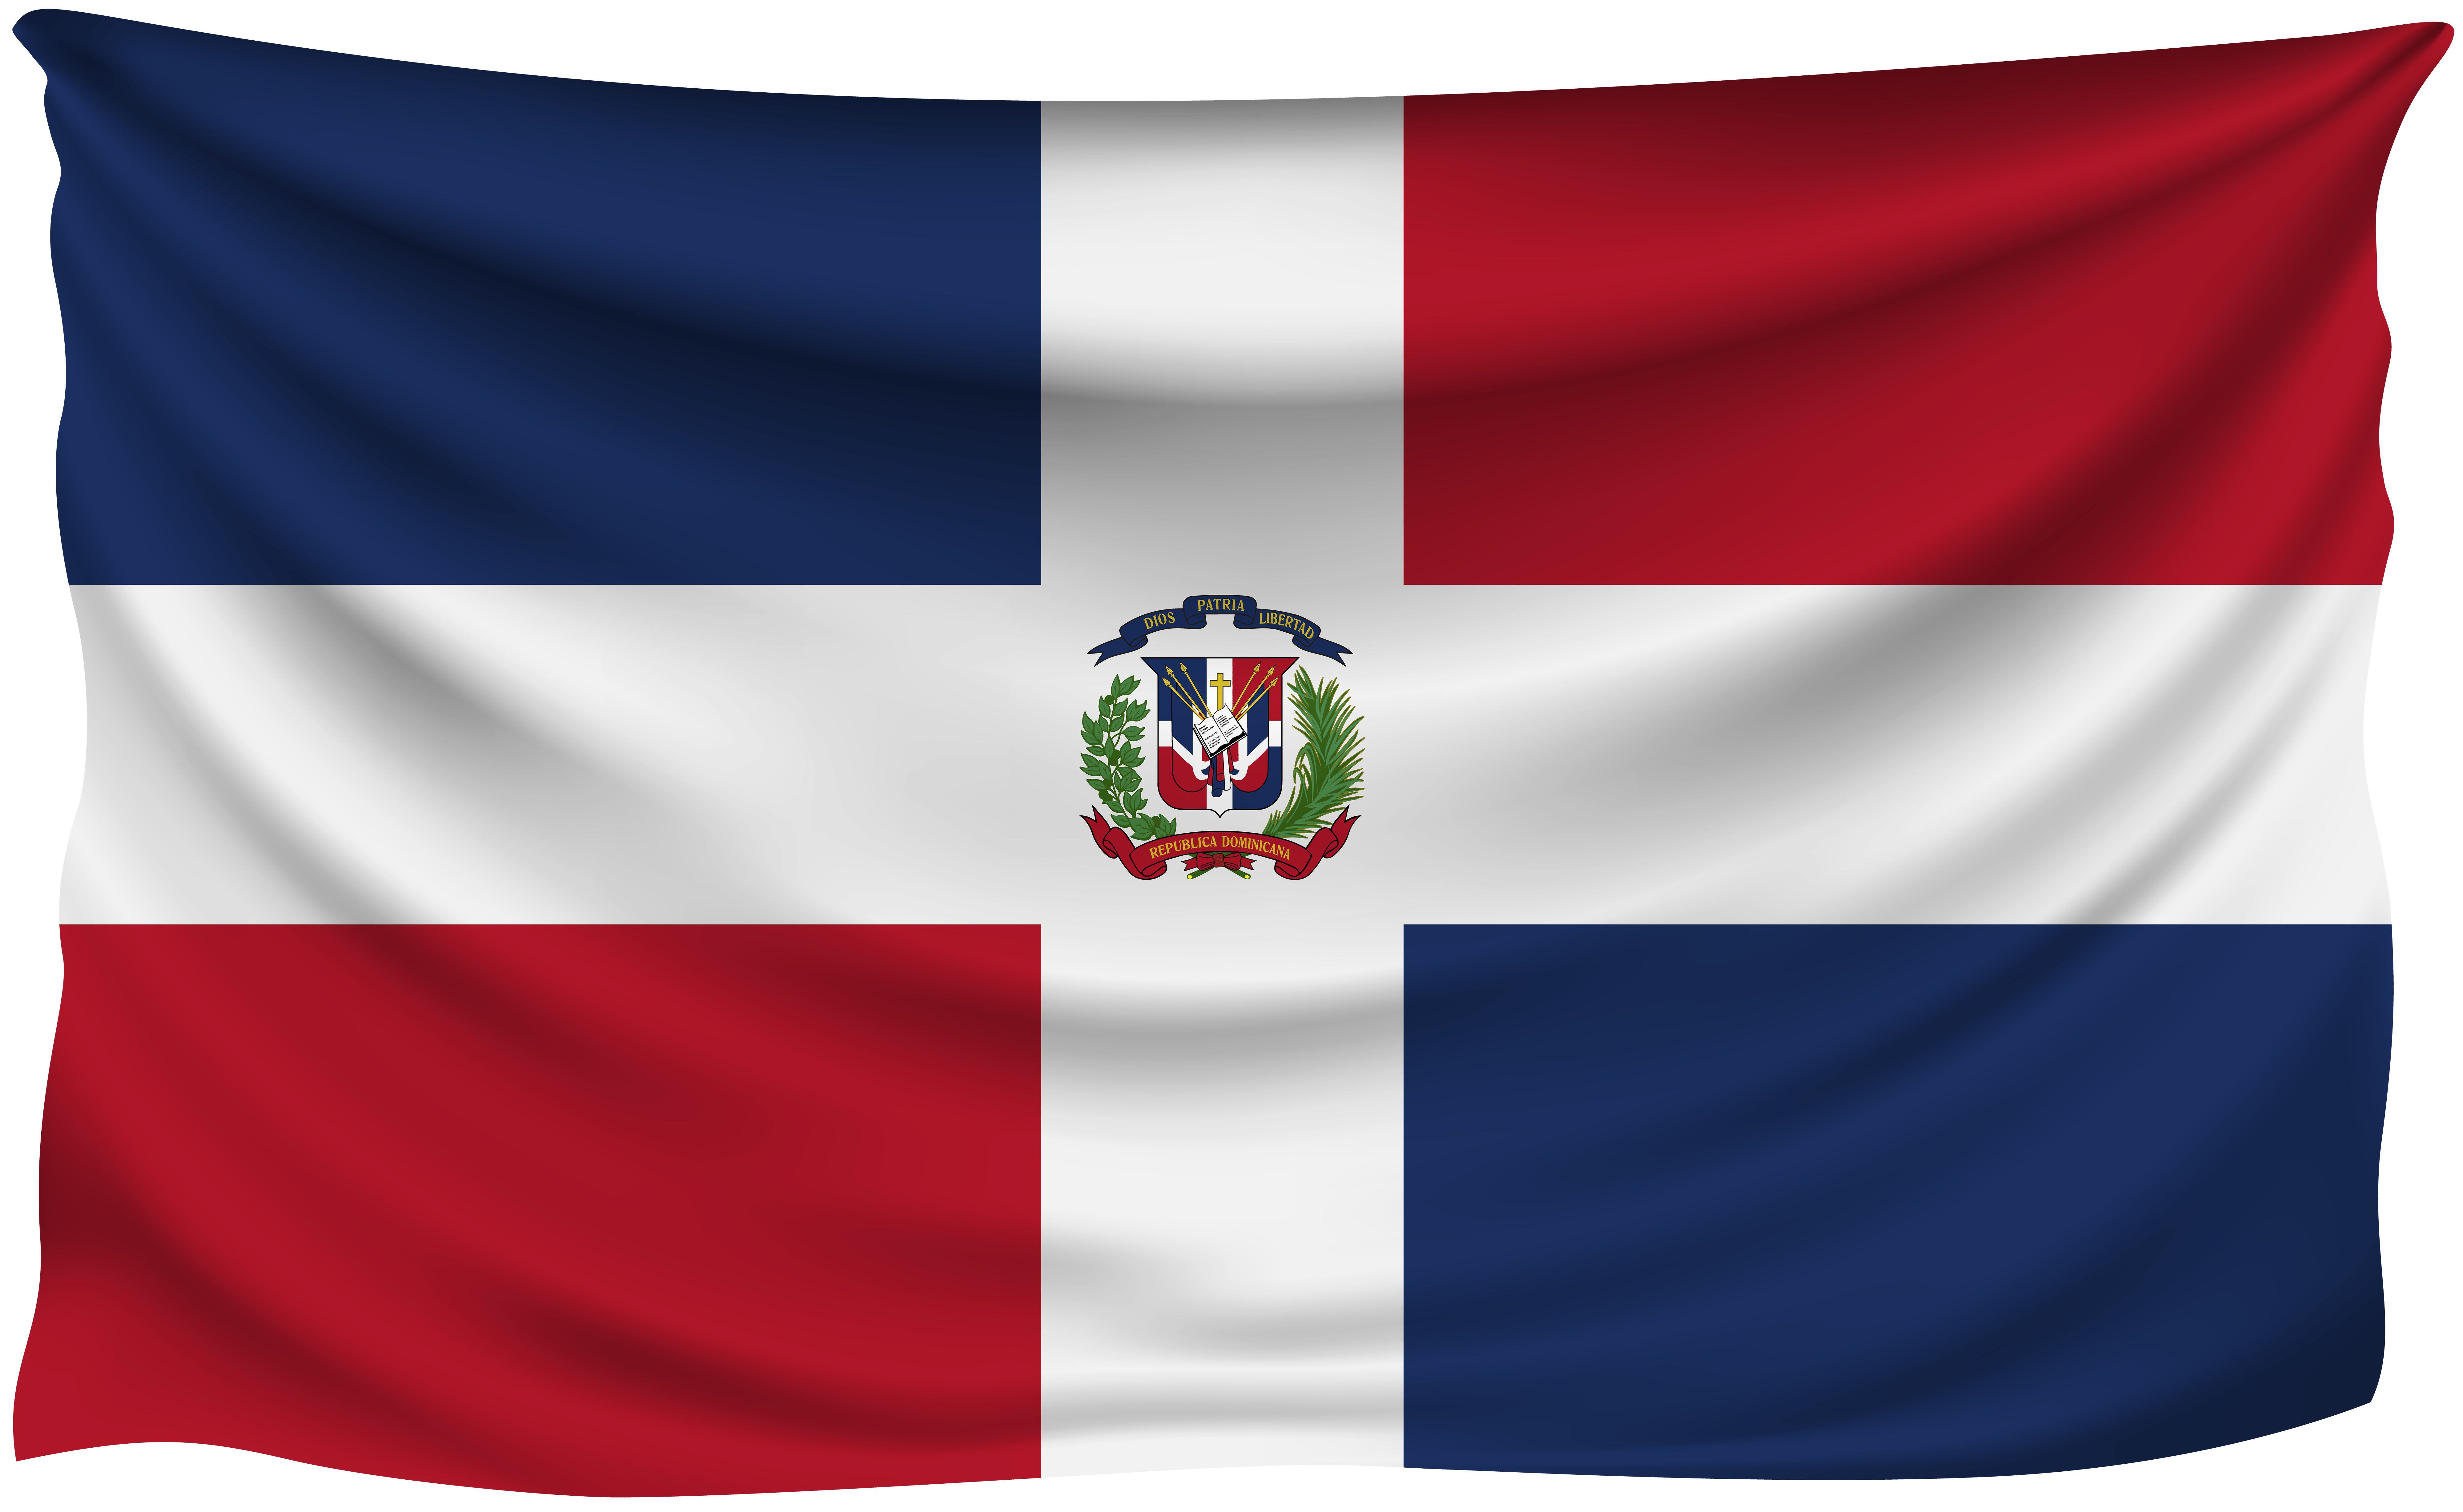 20085 Dominican Republic Flag Images Stock Photos  Vectors  Shutterstock